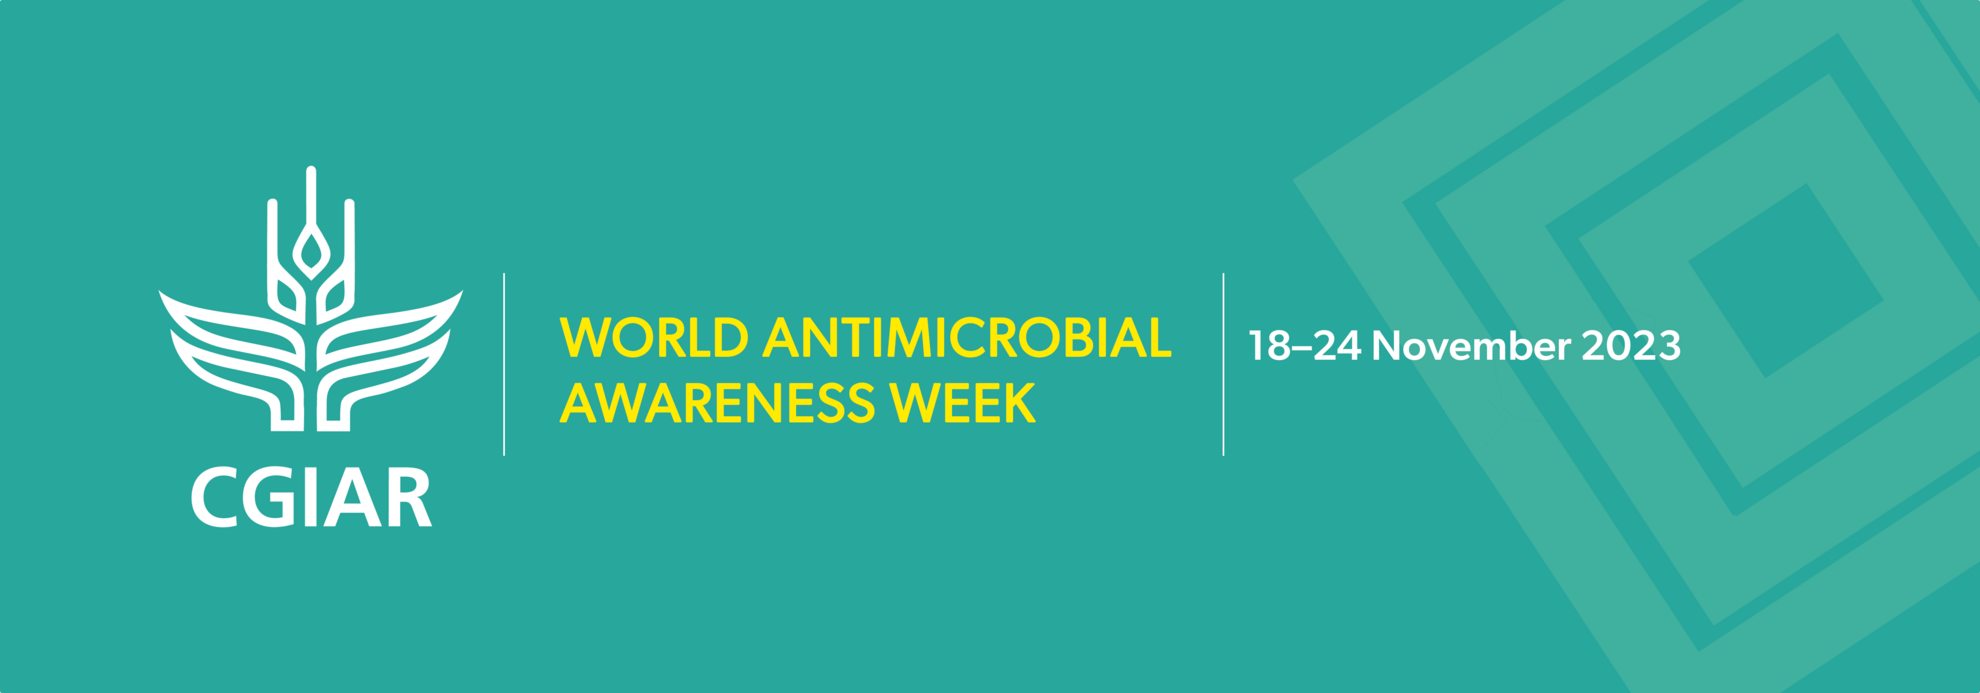 World Antimicrobial Awareness Week 2023